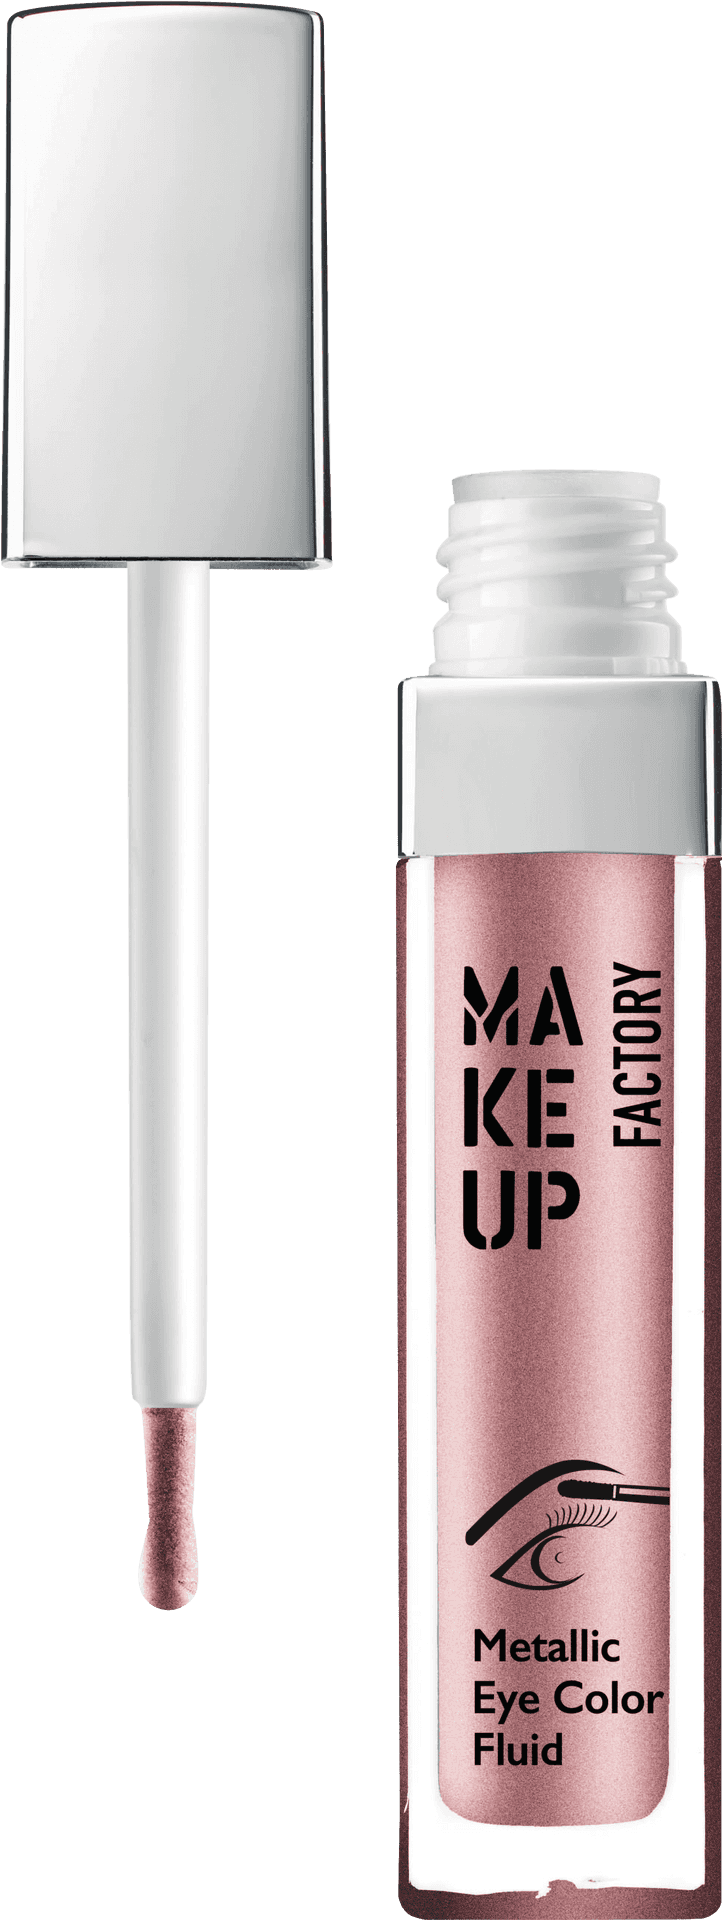 Metallic Eye Color Fluid Makeup Product PNG